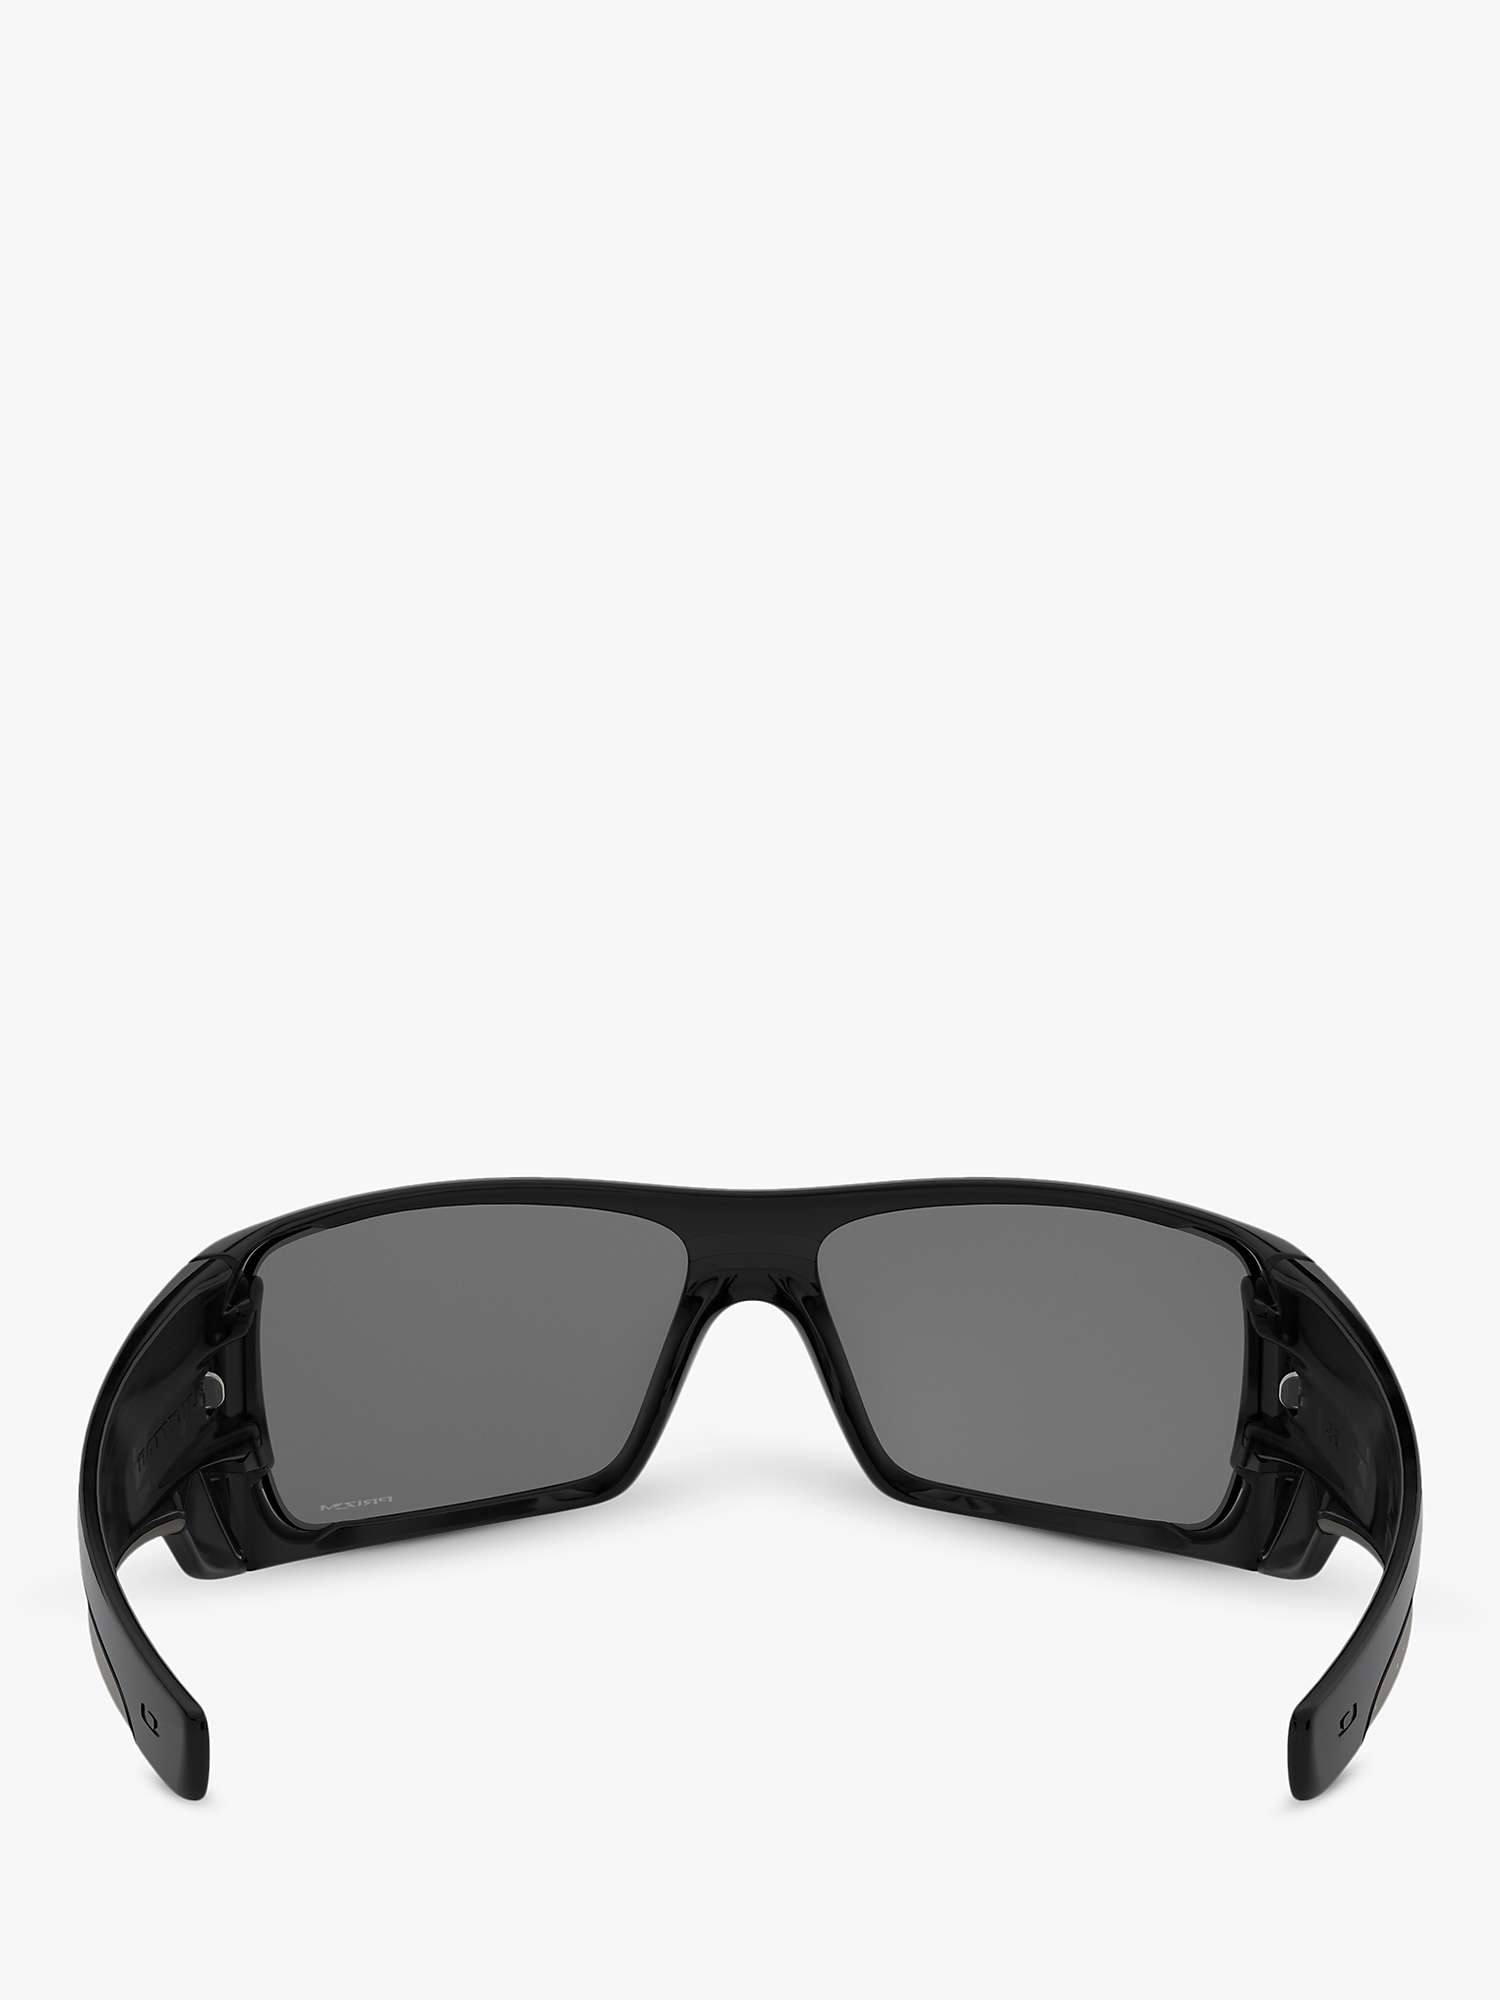 Buy Oakley OO9101 Men's Batwolf Prizm Rectangular Sunglasses, Black Ink/Grey Online at johnlewis.com